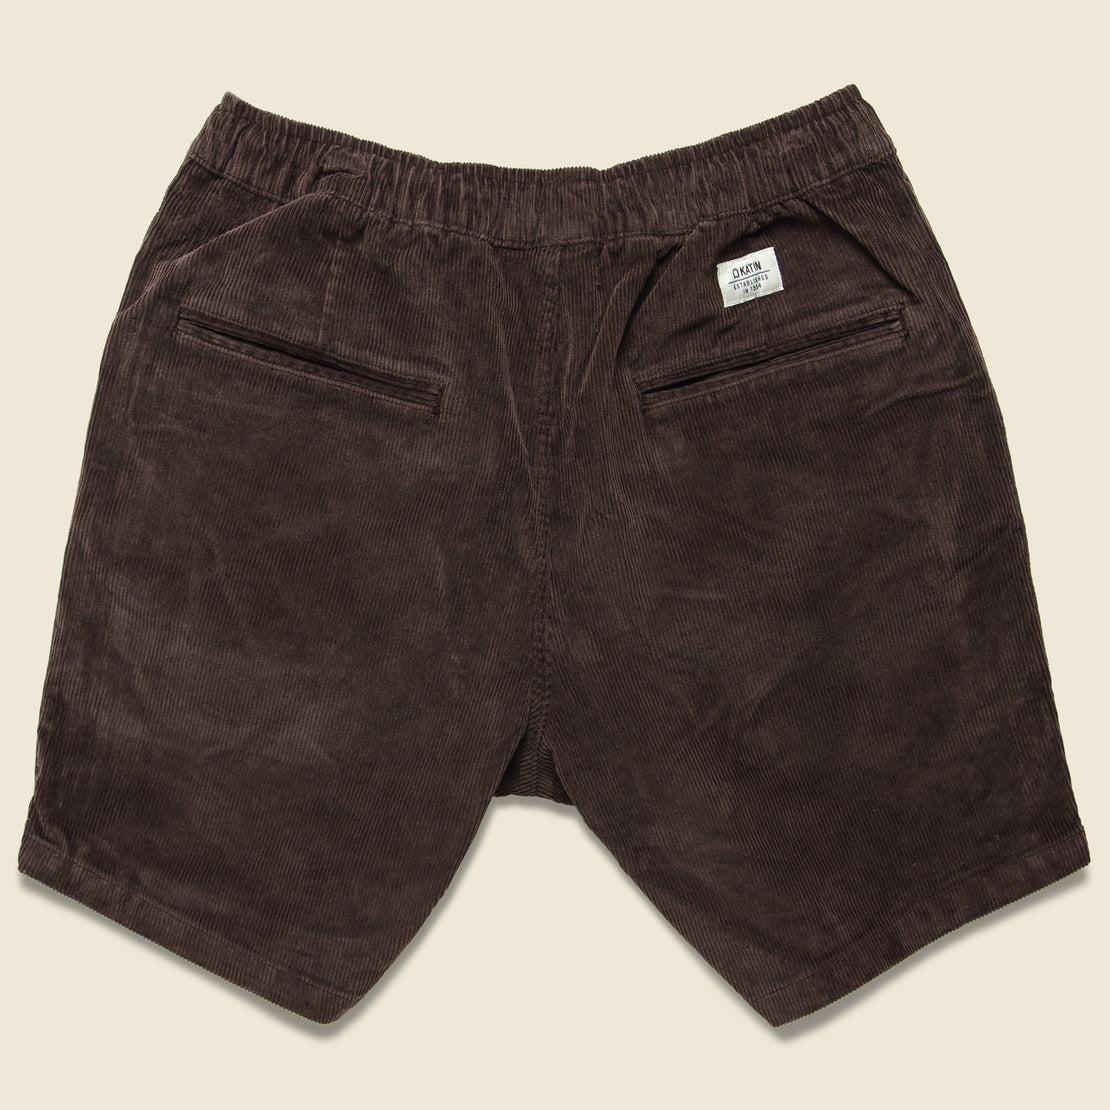 Kord Short - Walnut - Katin - STAG Provisions - Shorts - Solid